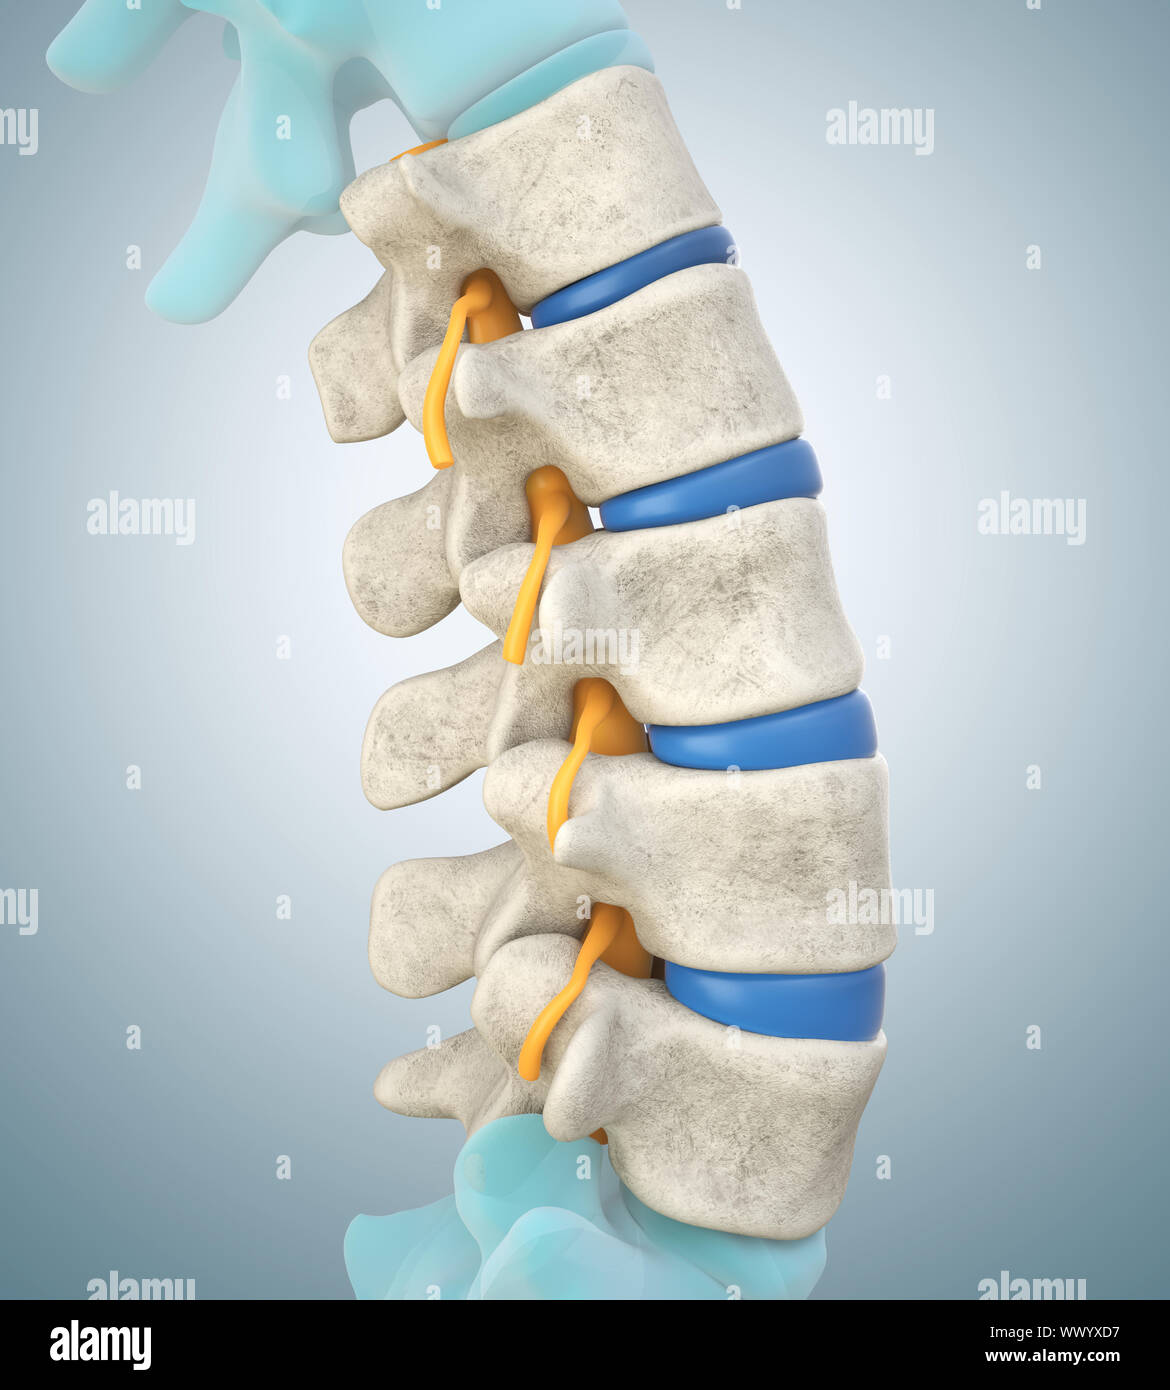 Human lumbar spine model demonstrating normal discs. 3D illustration Stock Photo